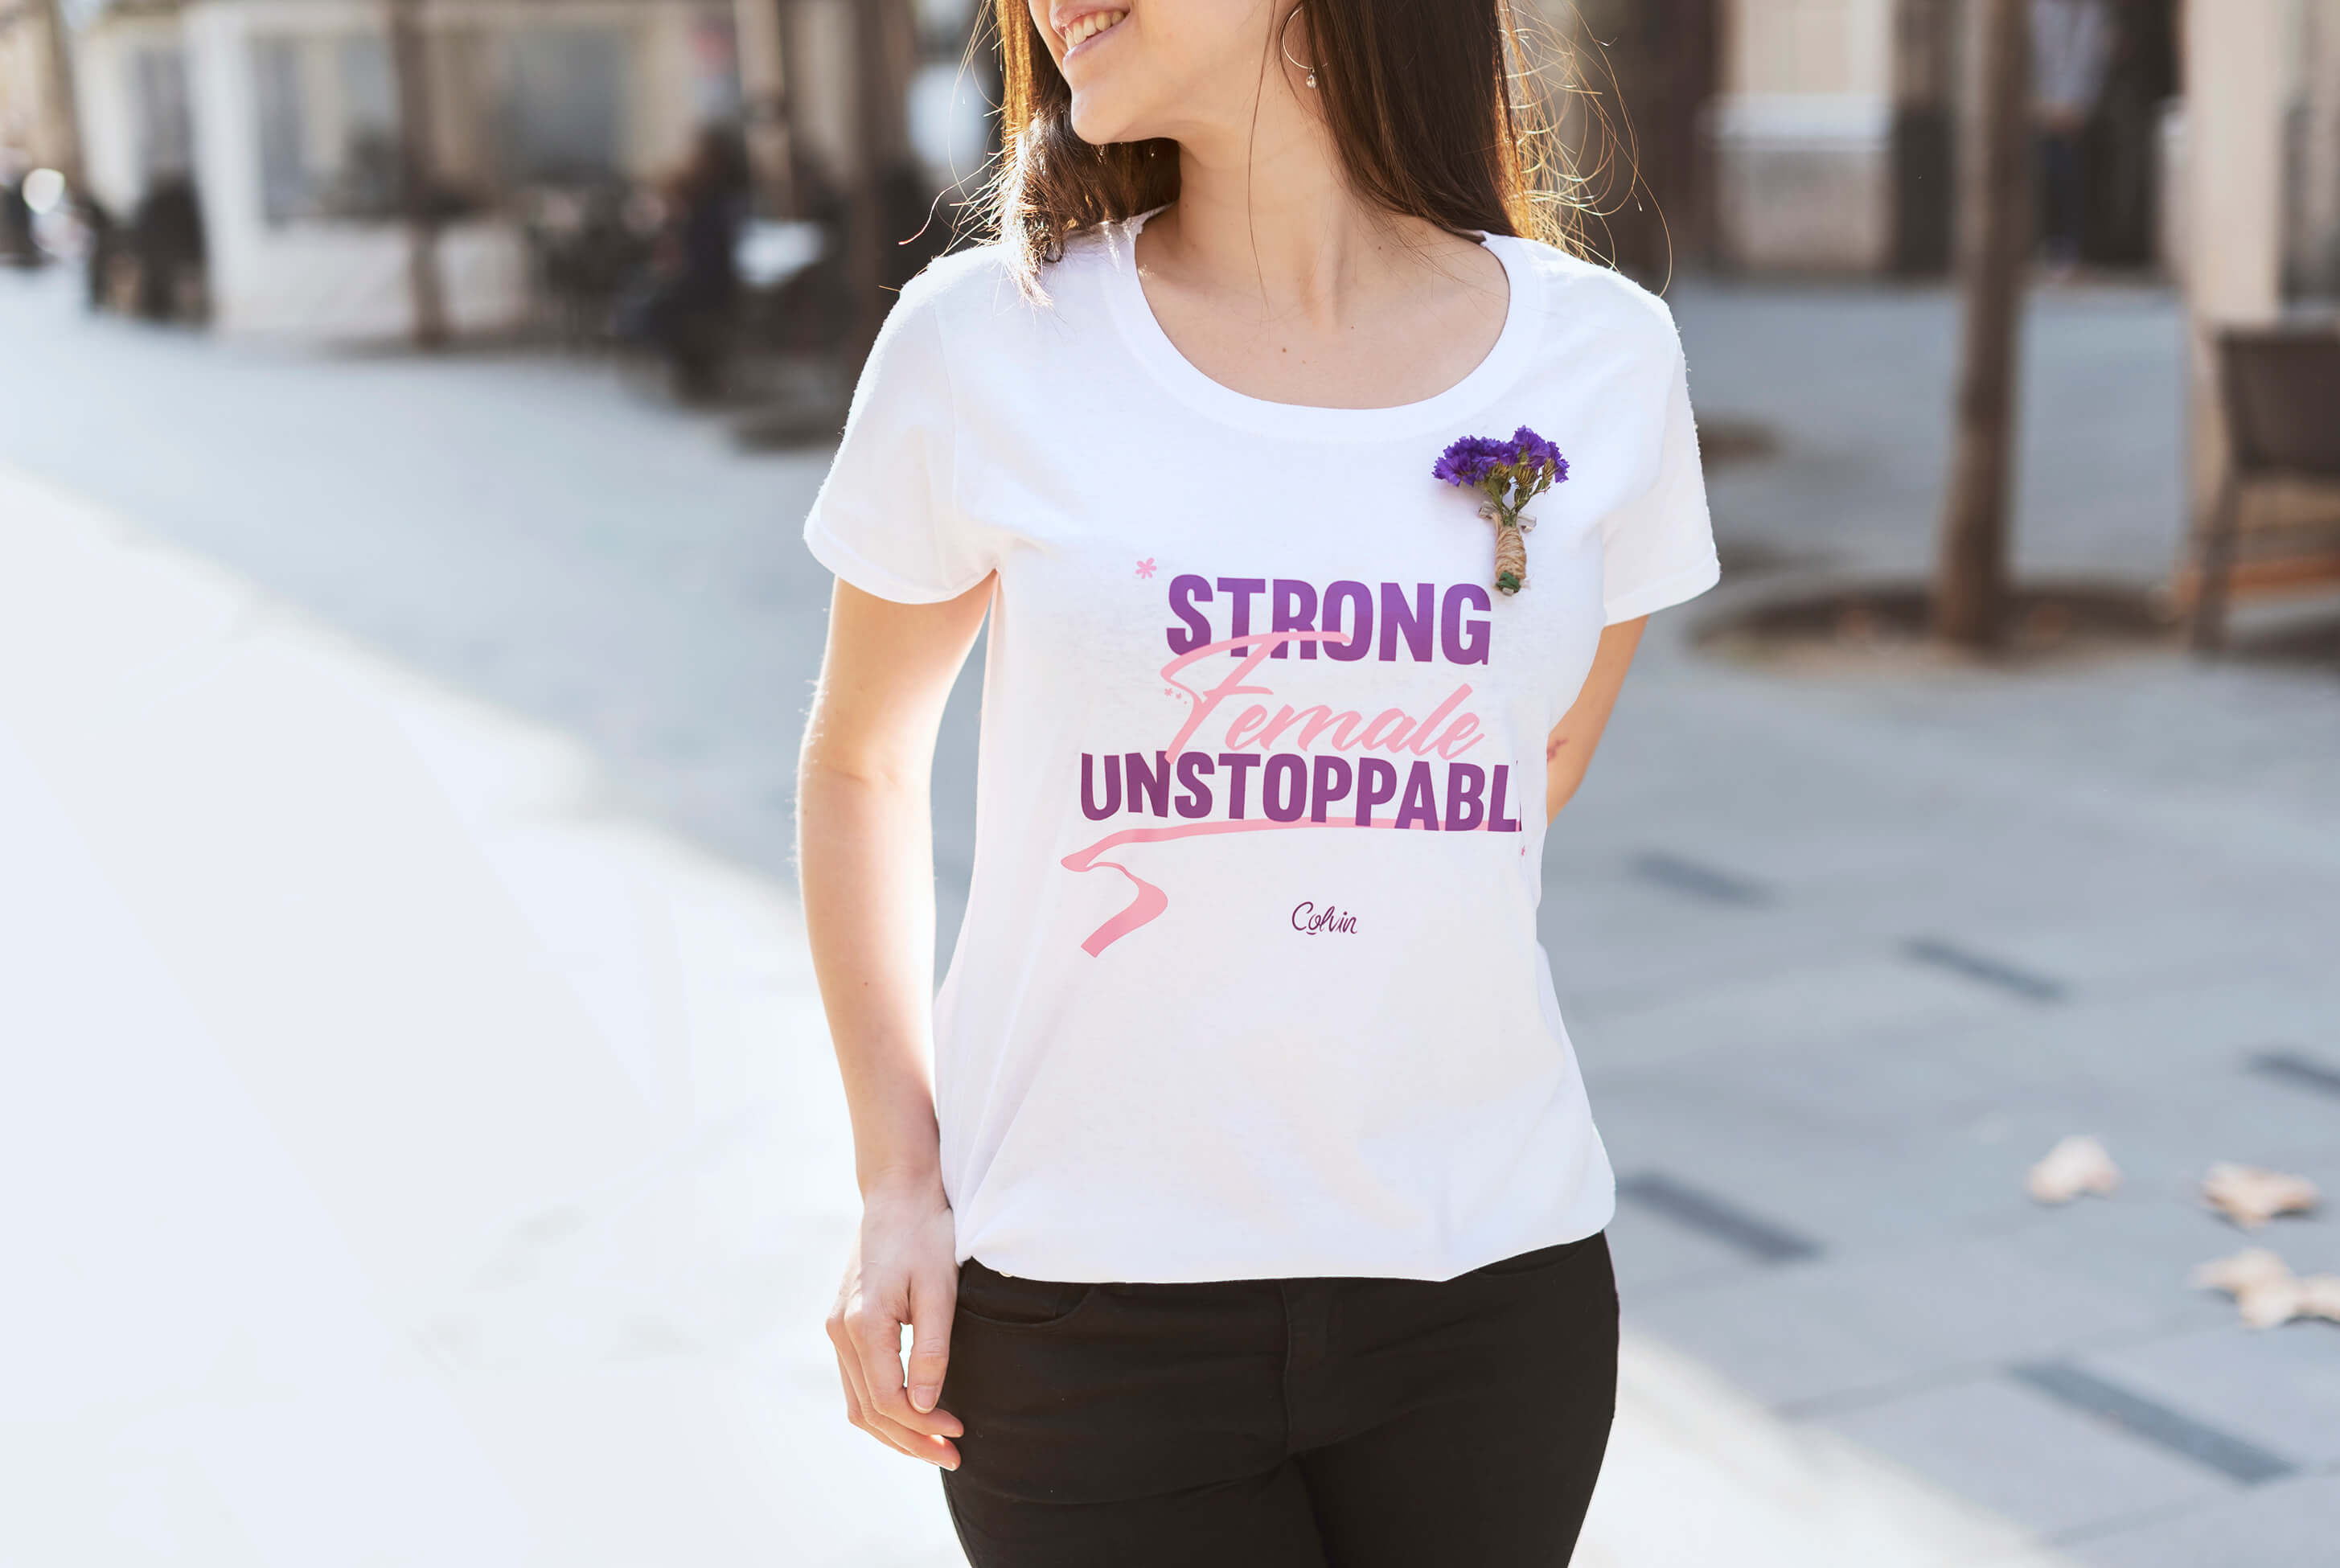 strong female unstoppable camiseta para el dia de la mujer